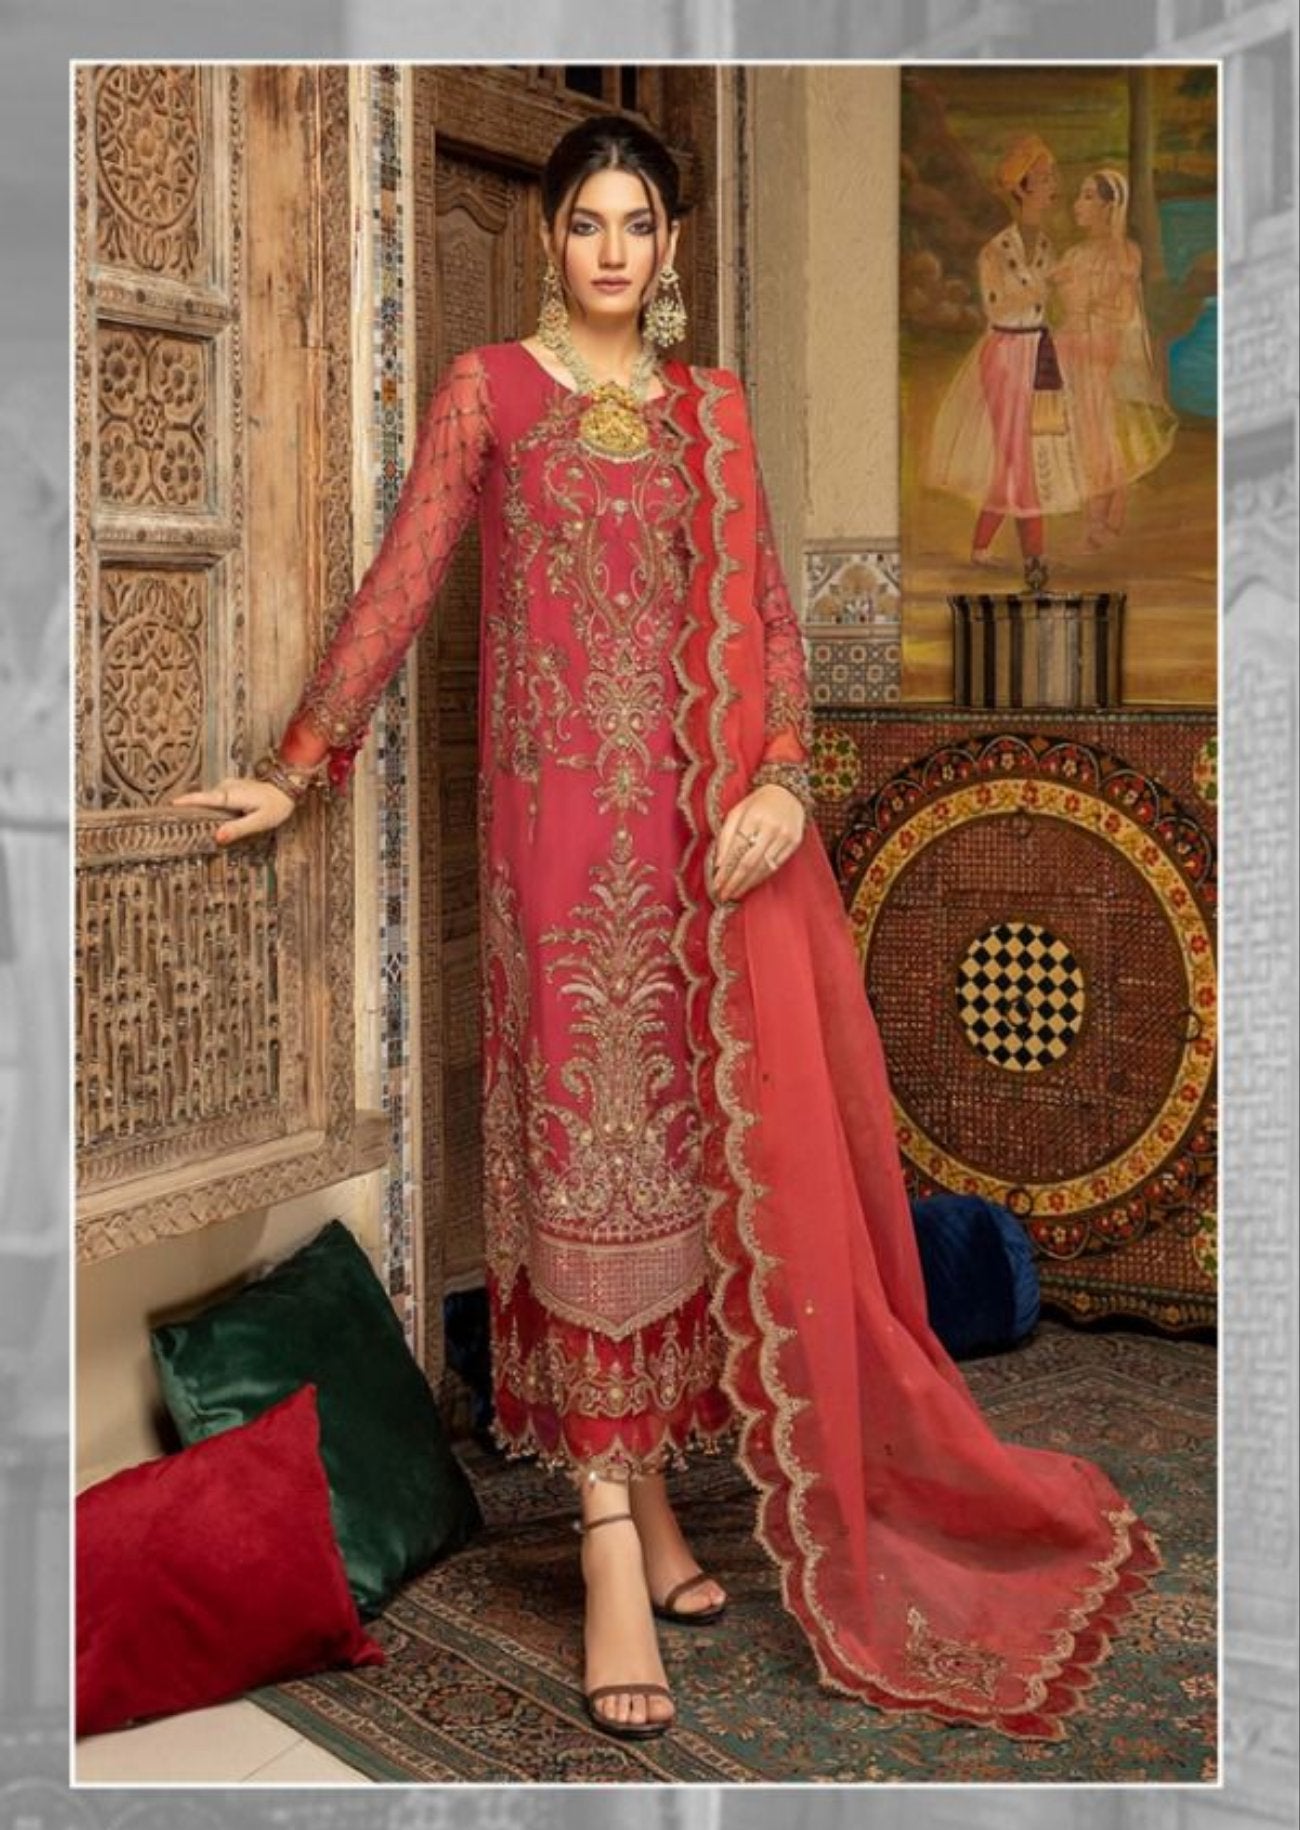 1321 Charizma Wedding Wear Georgette Pakitstani Suit Shopindiapparels.com 